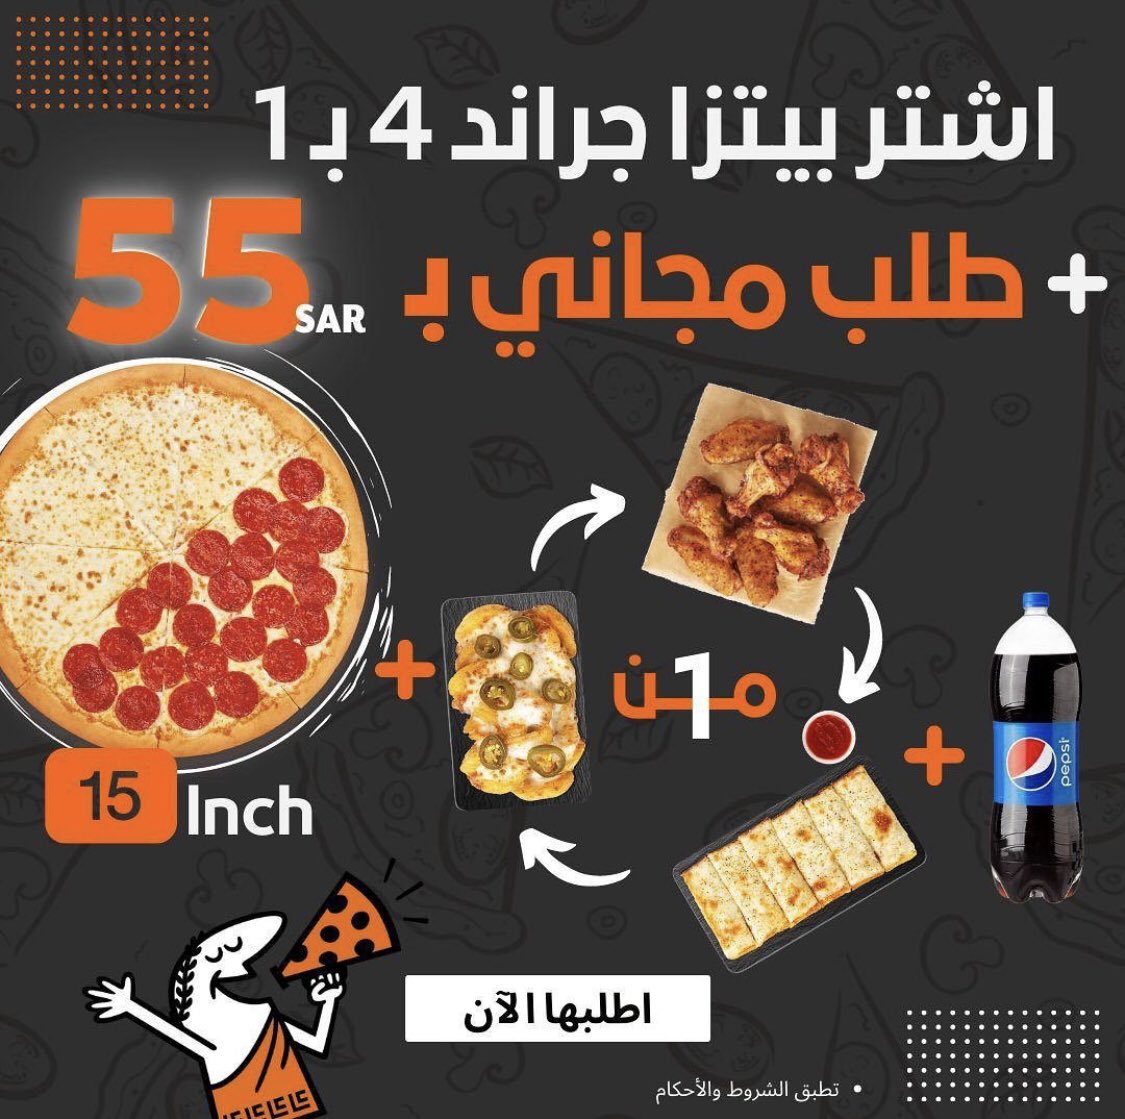 FP1e9c6XoAYw72O 1 - عروض المطاعم لشهر رمضان الكريم 2022 | عروض مطاعم السعودية